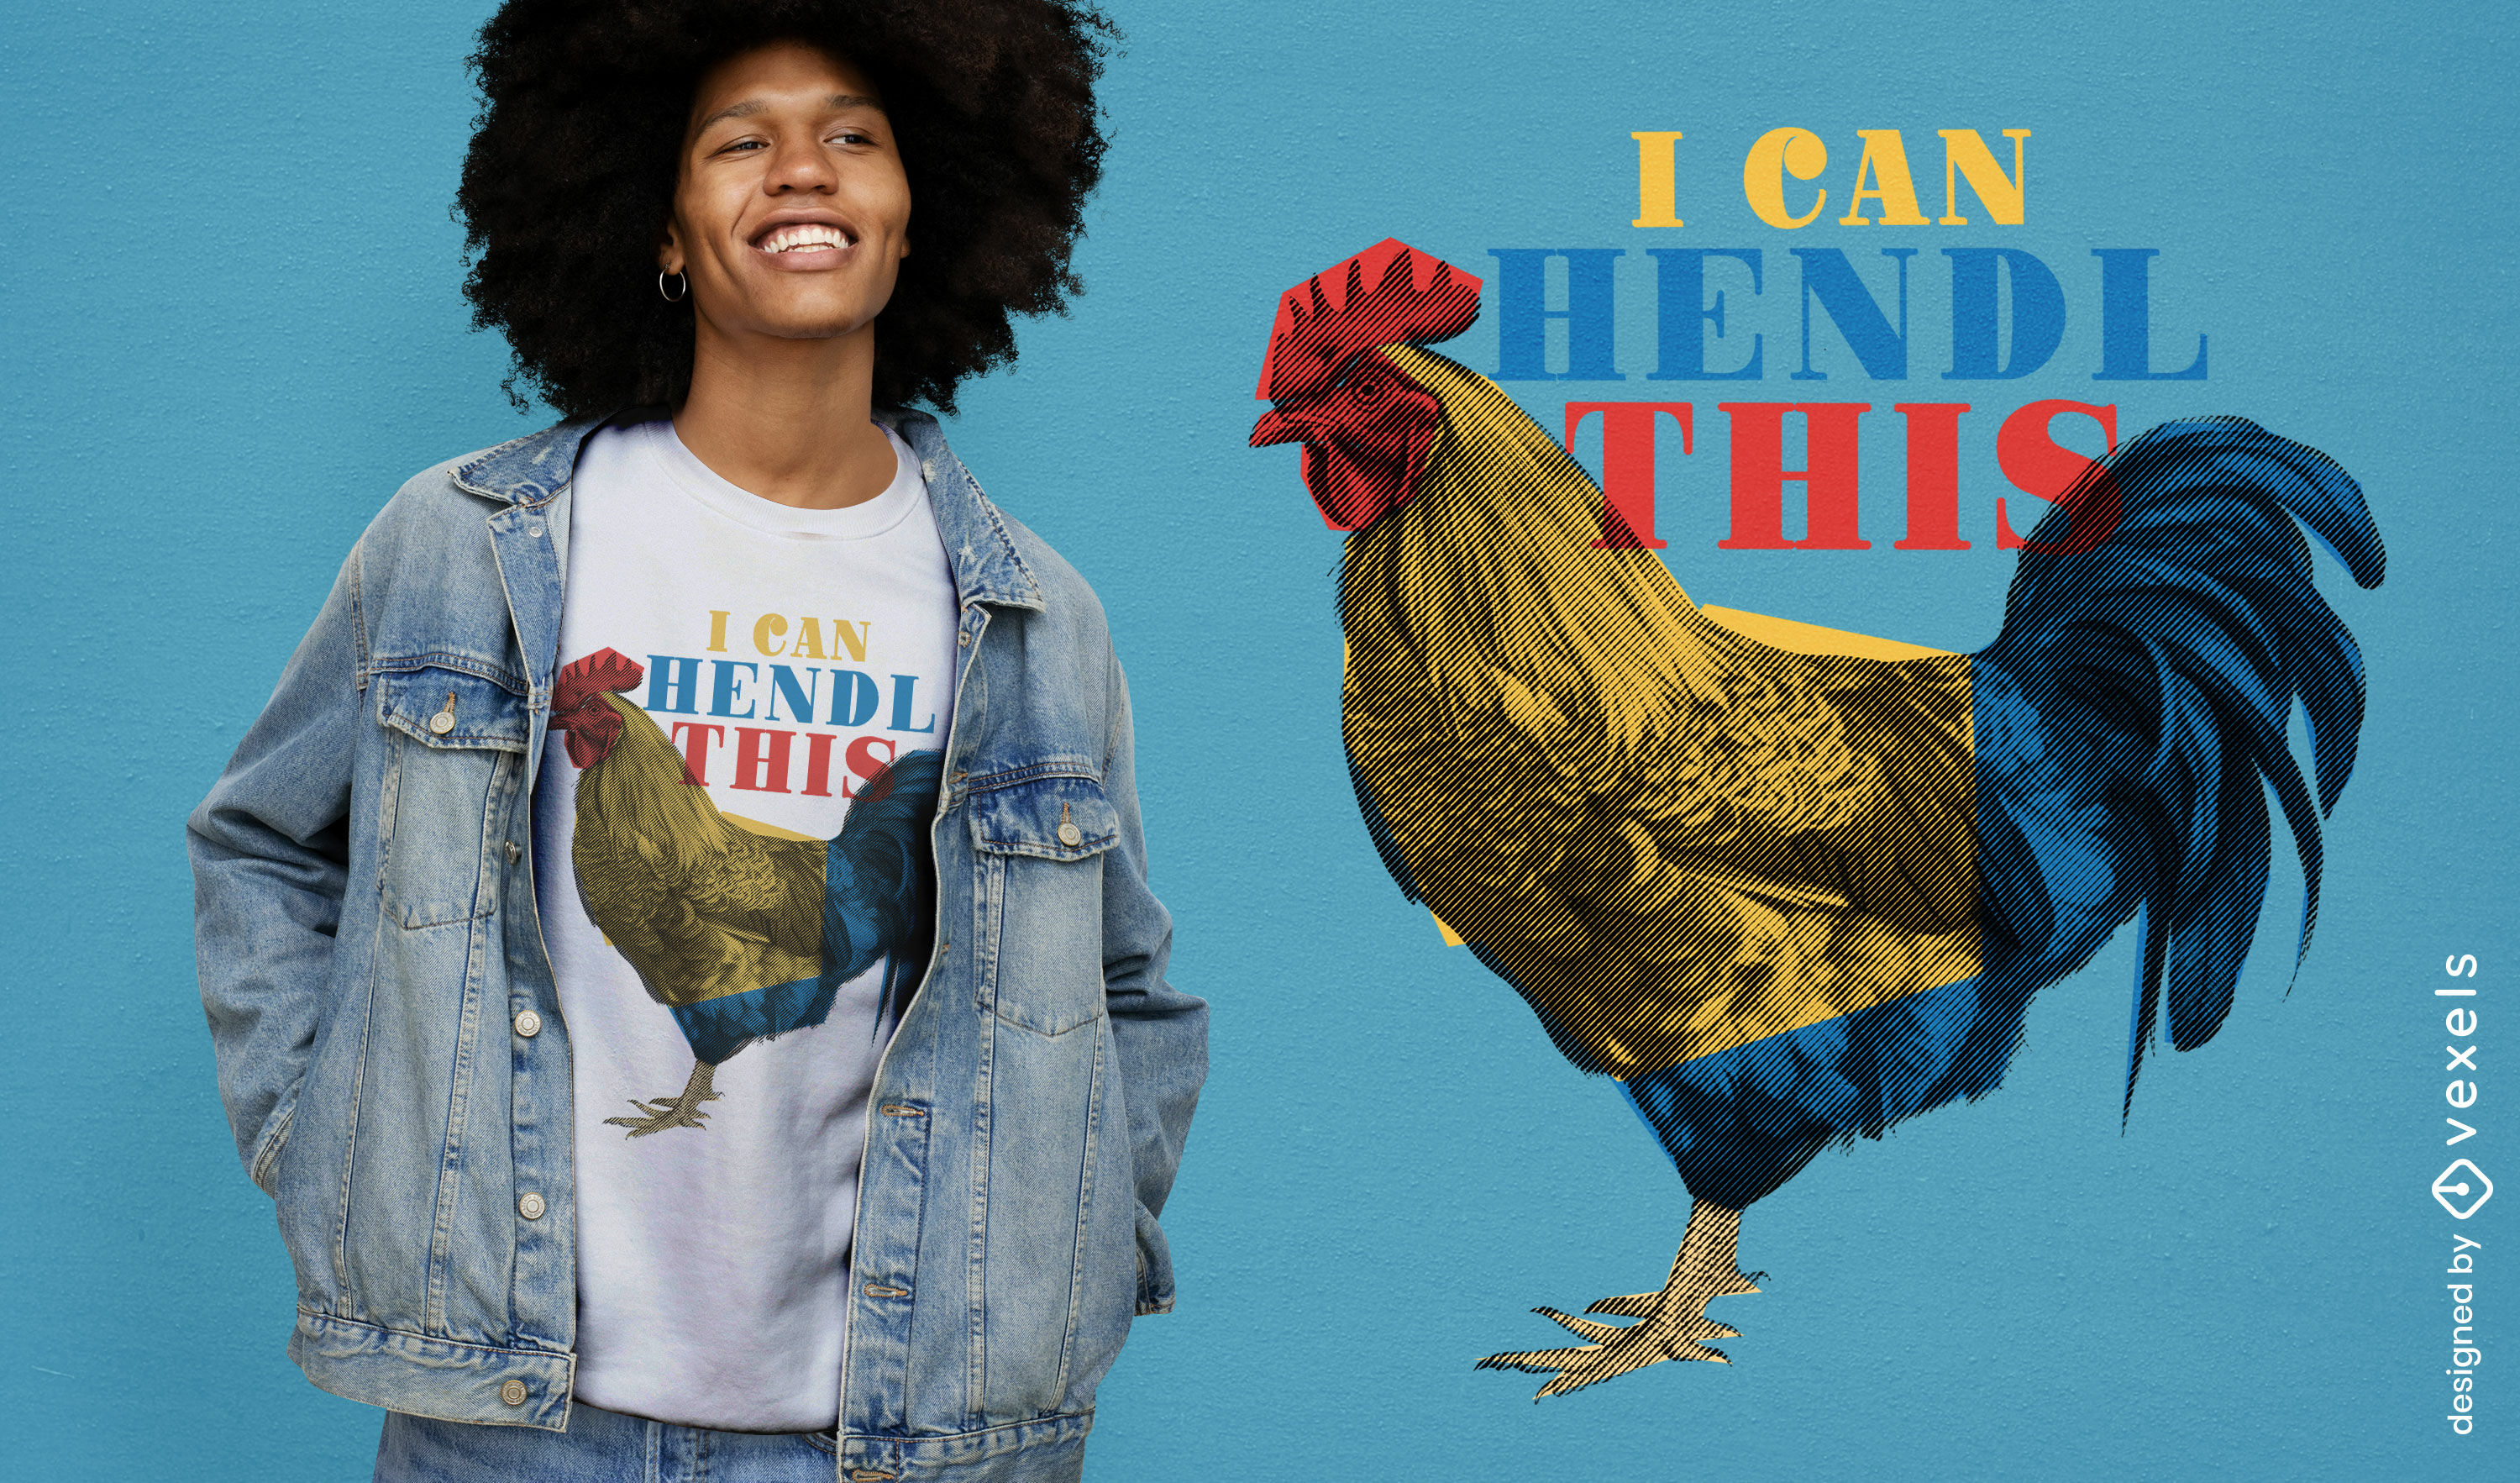 Rooster motivational t-shirt design